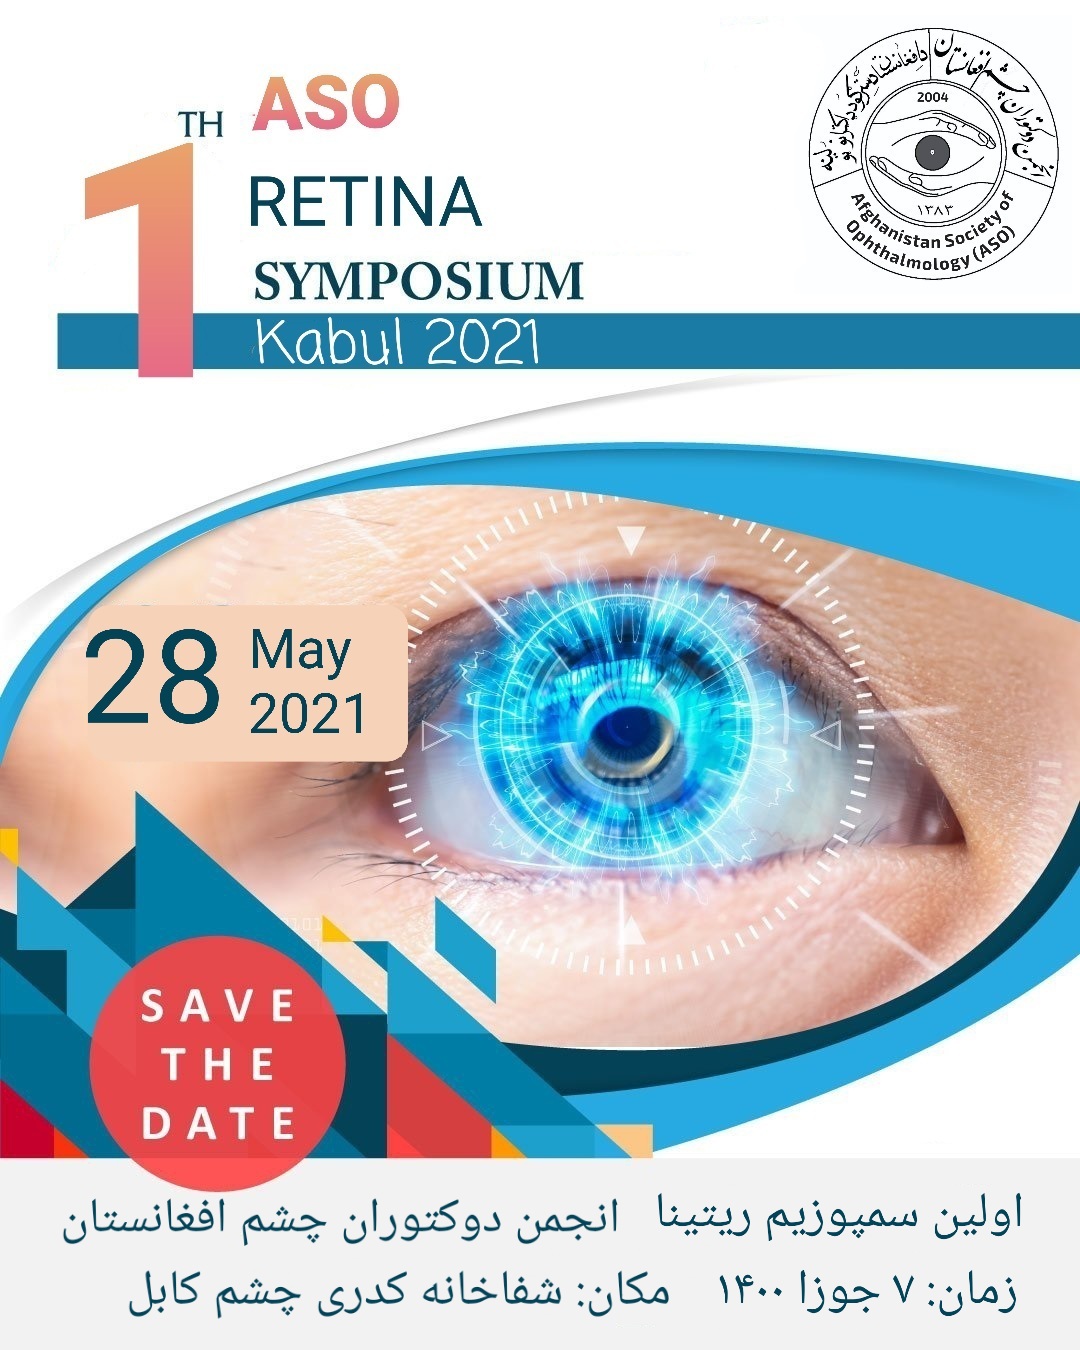  1st ASO Retina Symposium 28 May 2021, Kabul